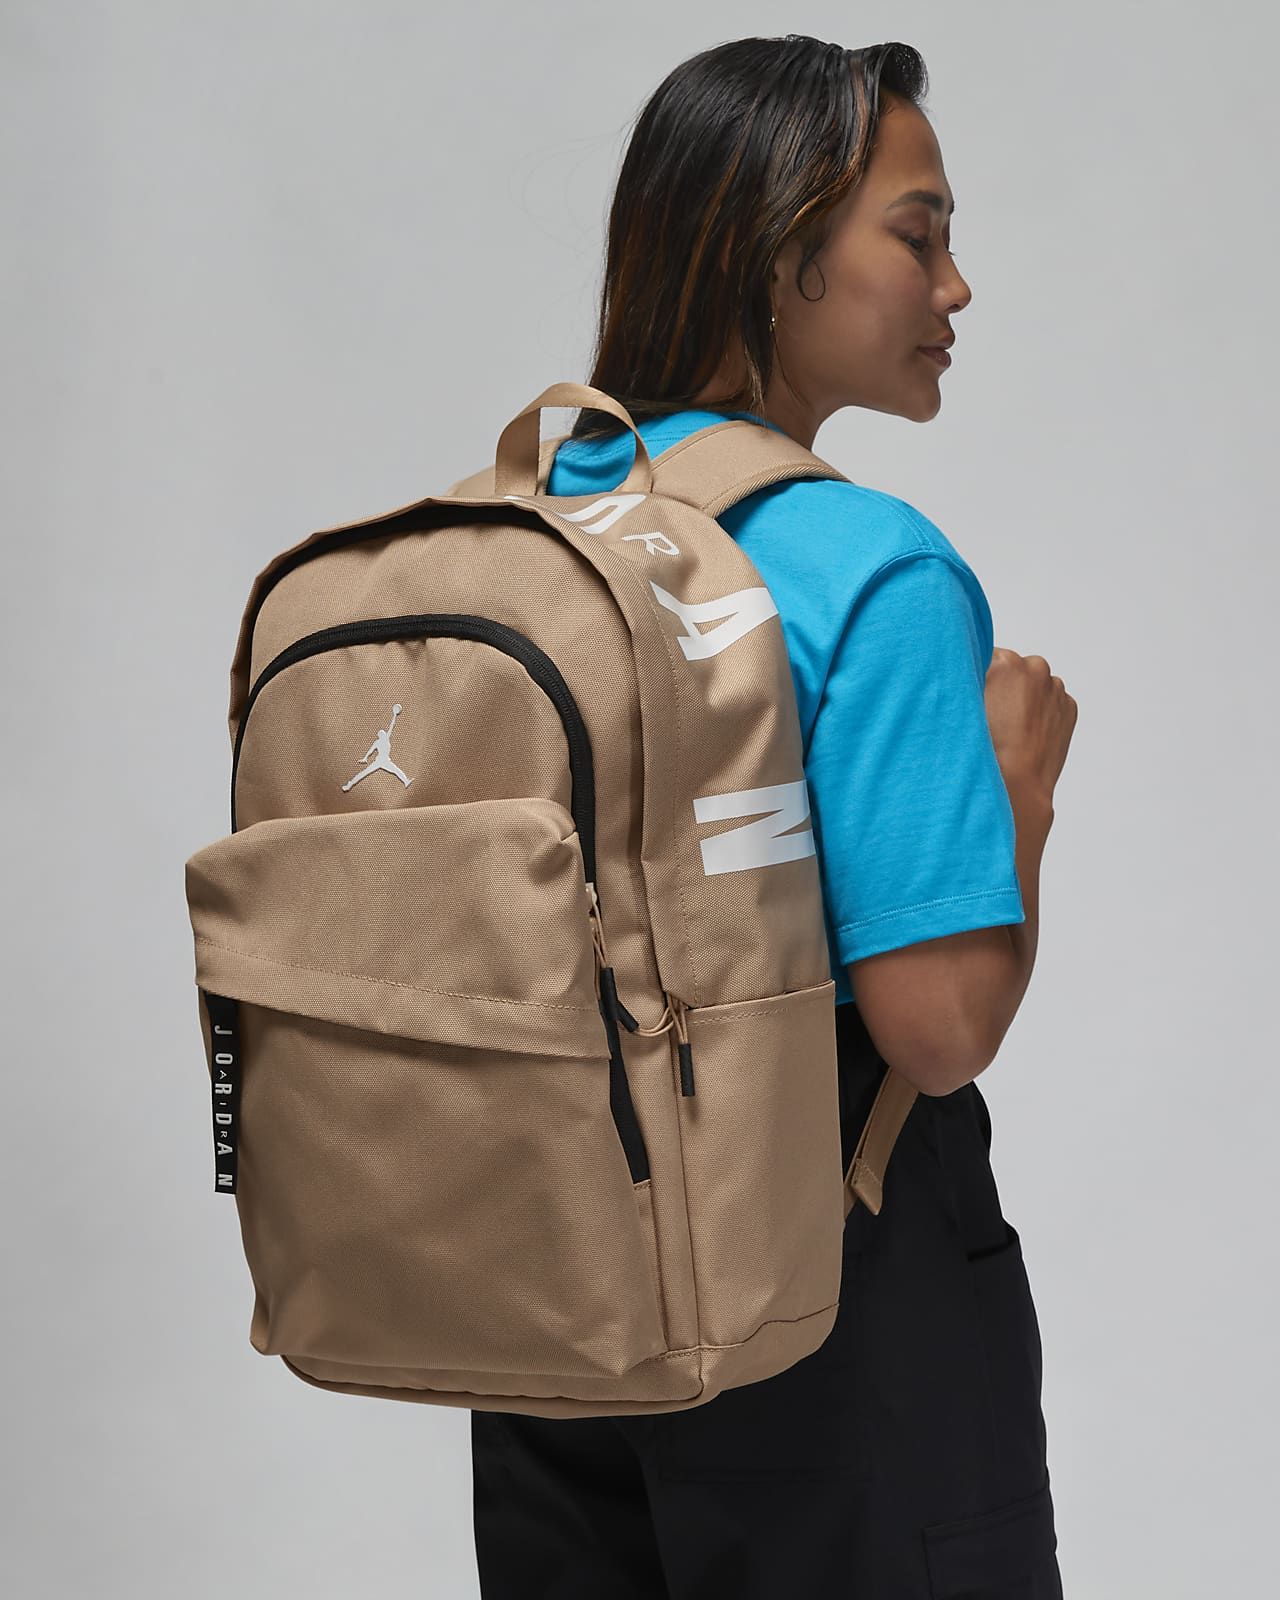 Jordan Backpack (Large). Nike.com | Nike (US)